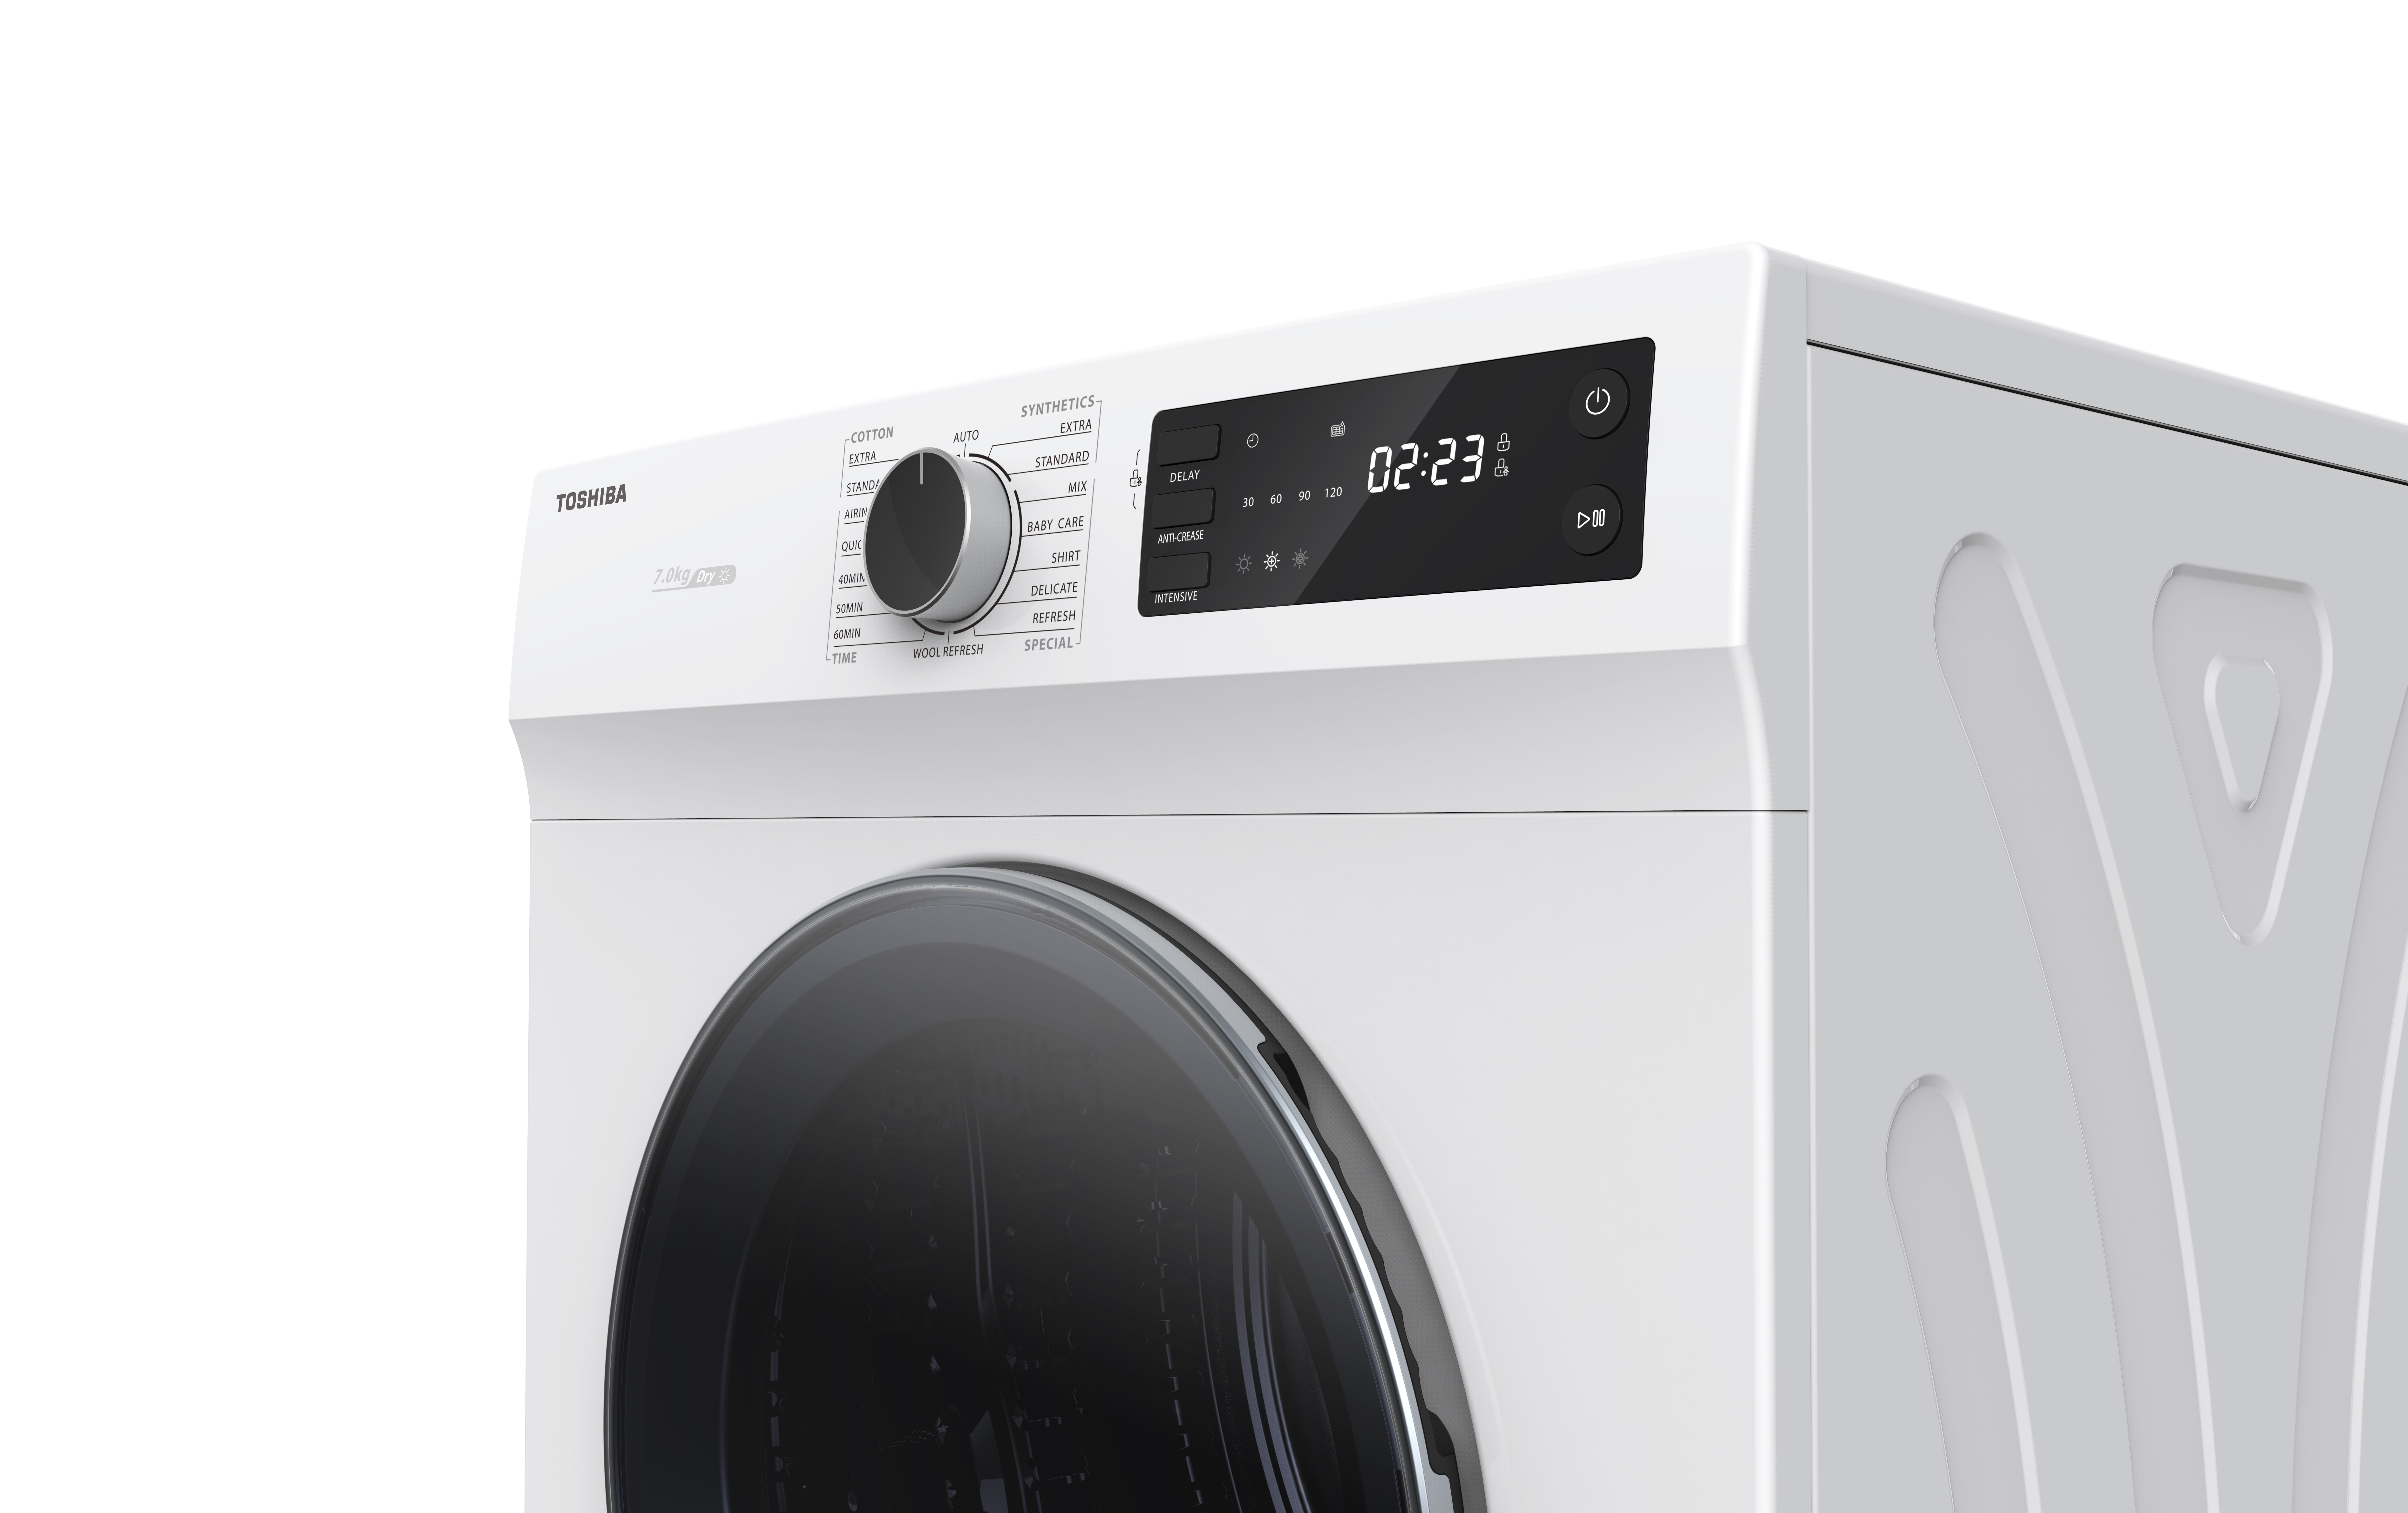 Dryer T01 Series